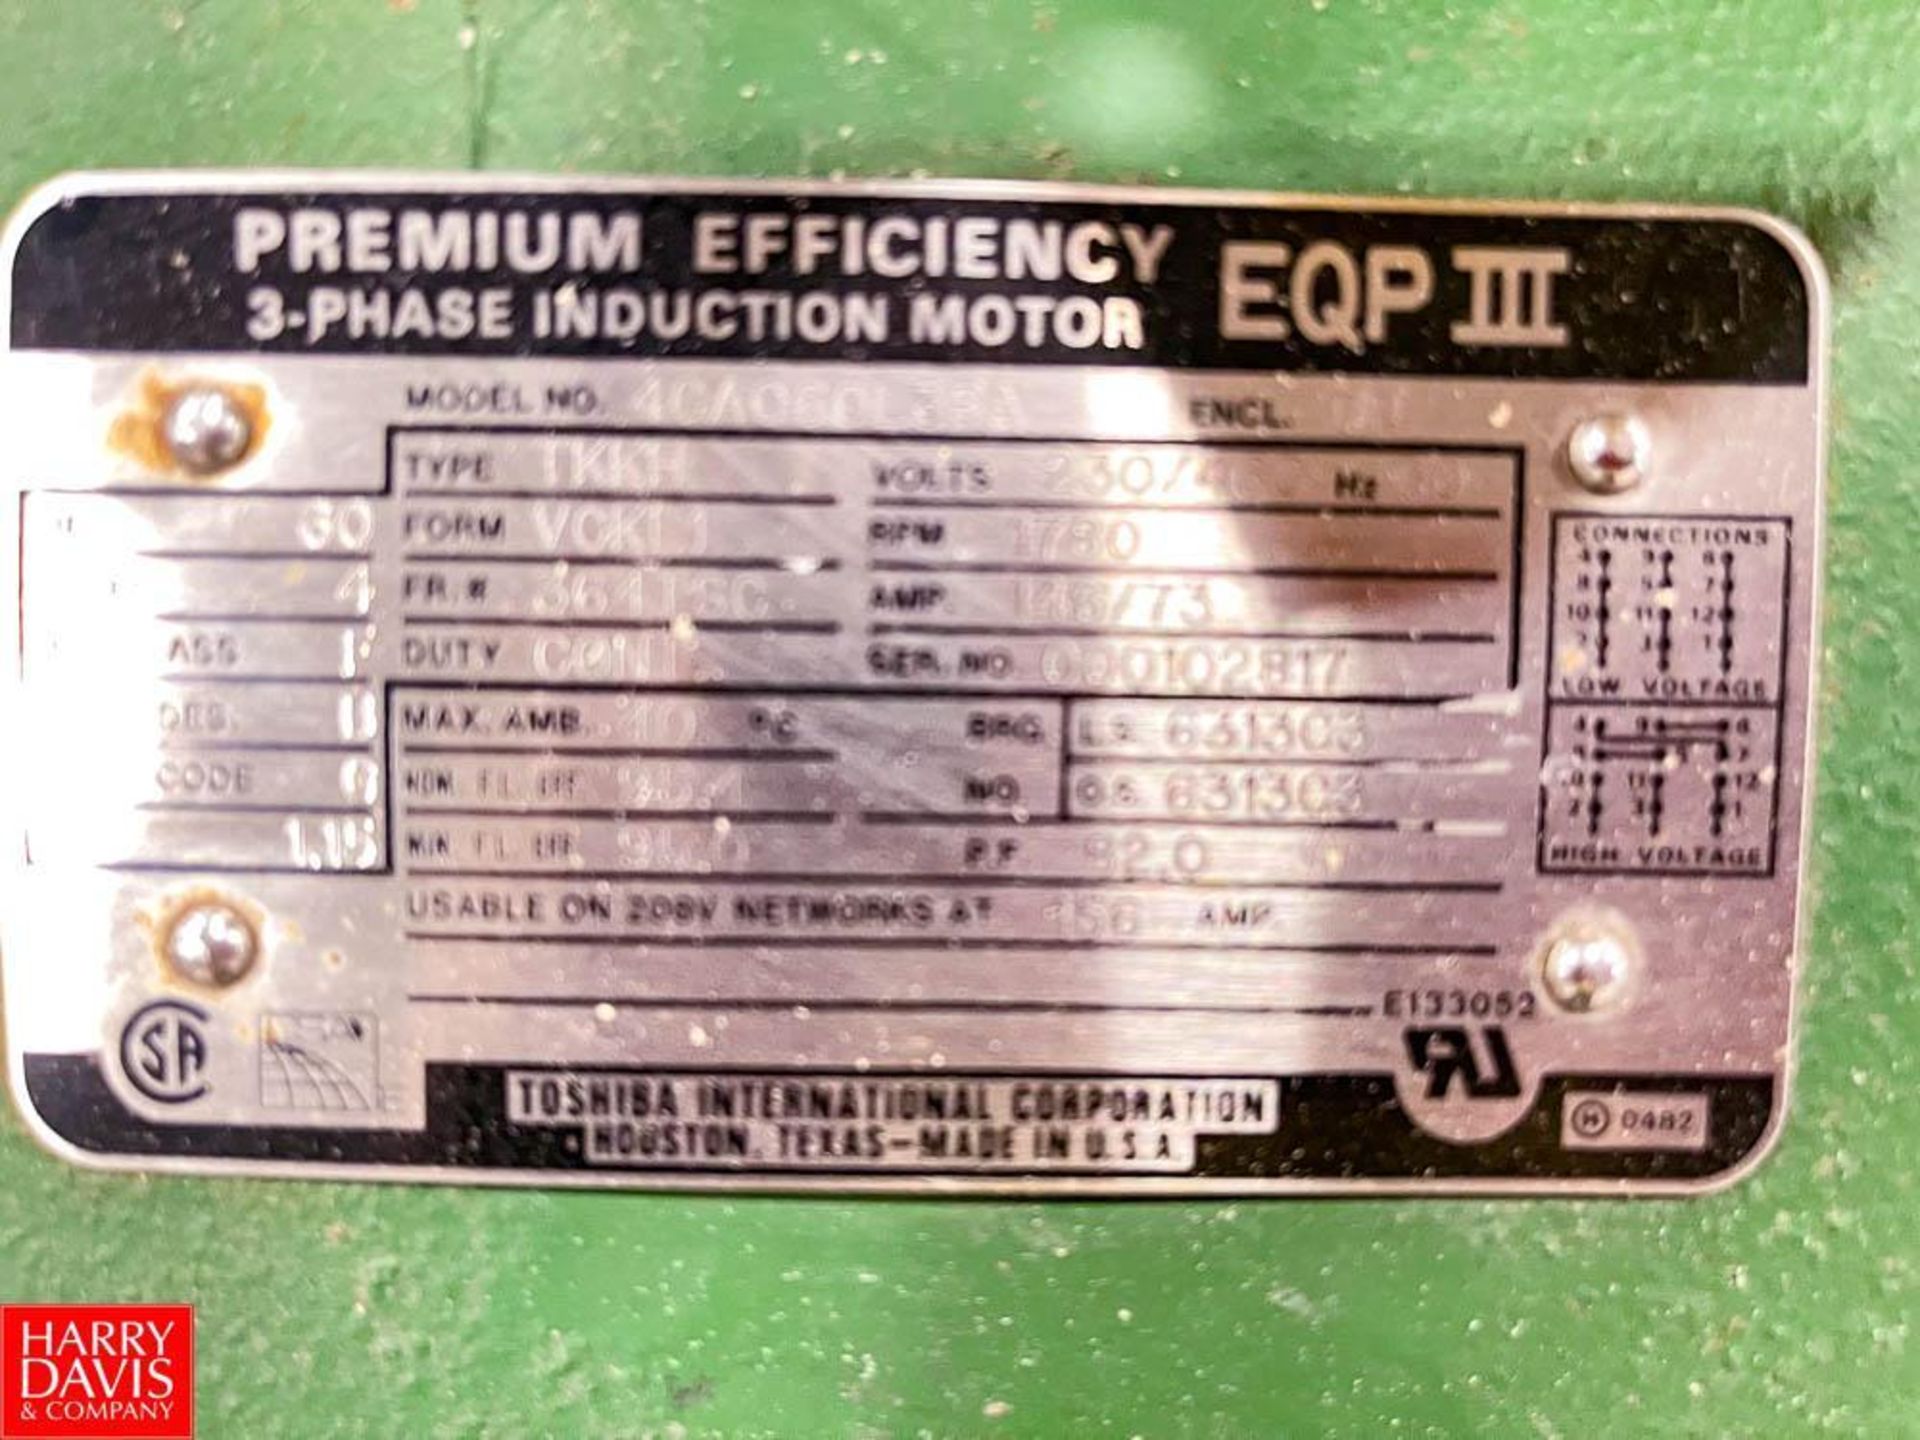 Premium 60 HP 1,780 RPM Motor - Rigging Fee= $40 - Image 2 of 2